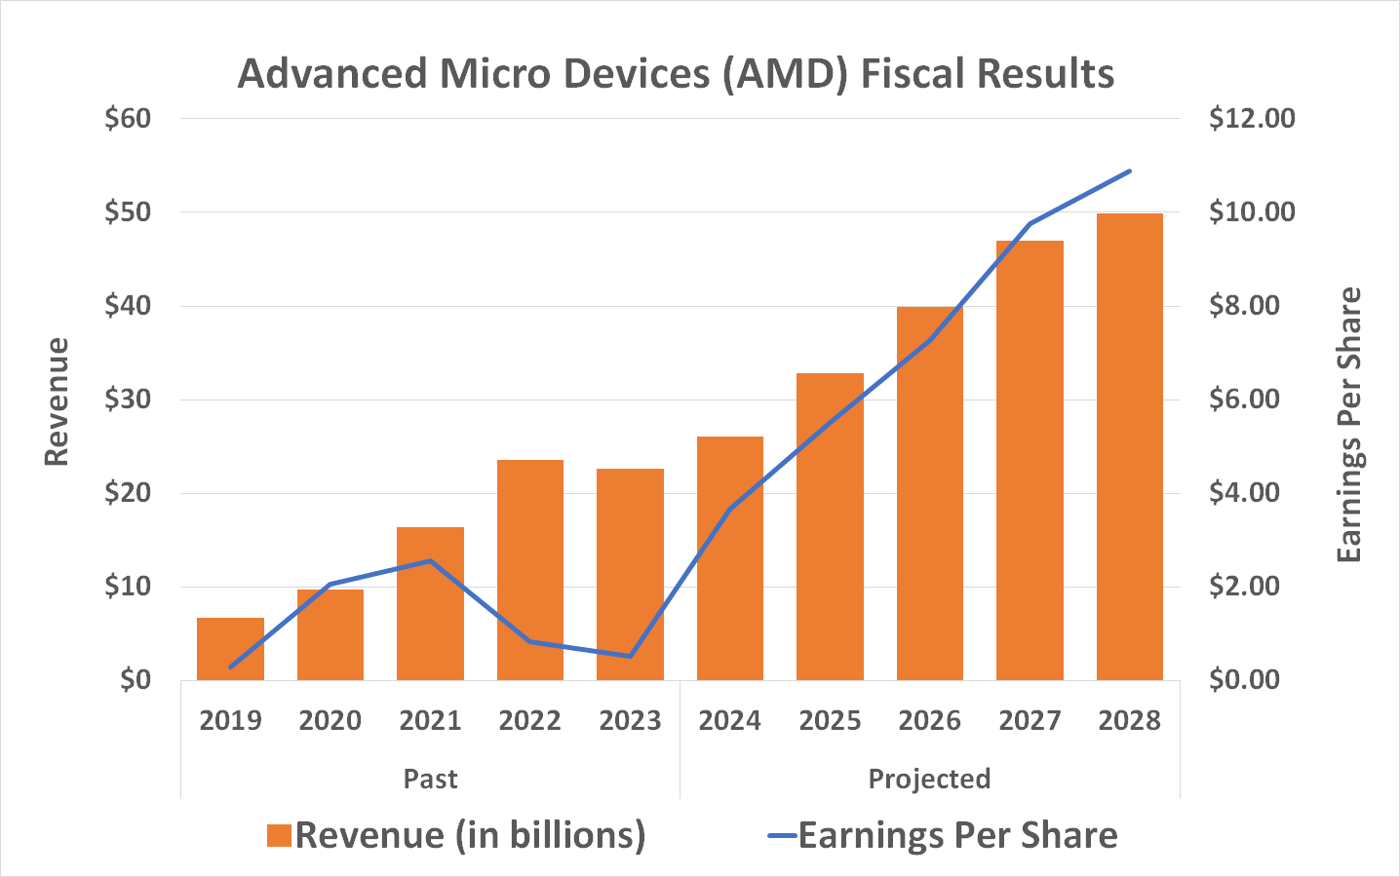 Will Advanced Micro Devices Reach a Trillion-Dollar Market Cap by 2030?